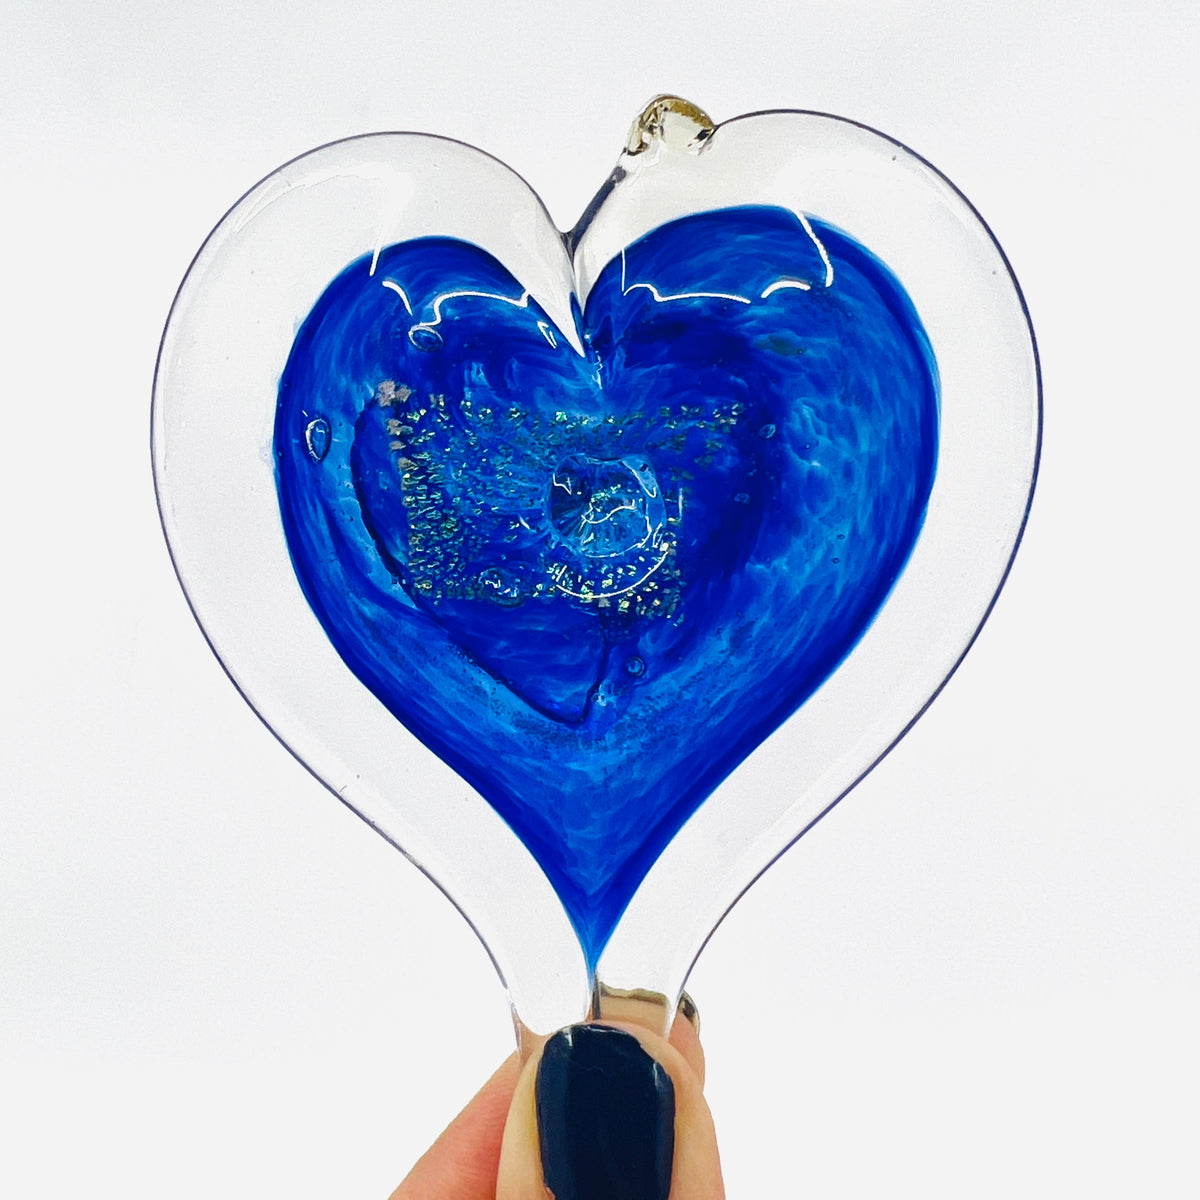 Heart of Glass by Original Art by Tony Regan